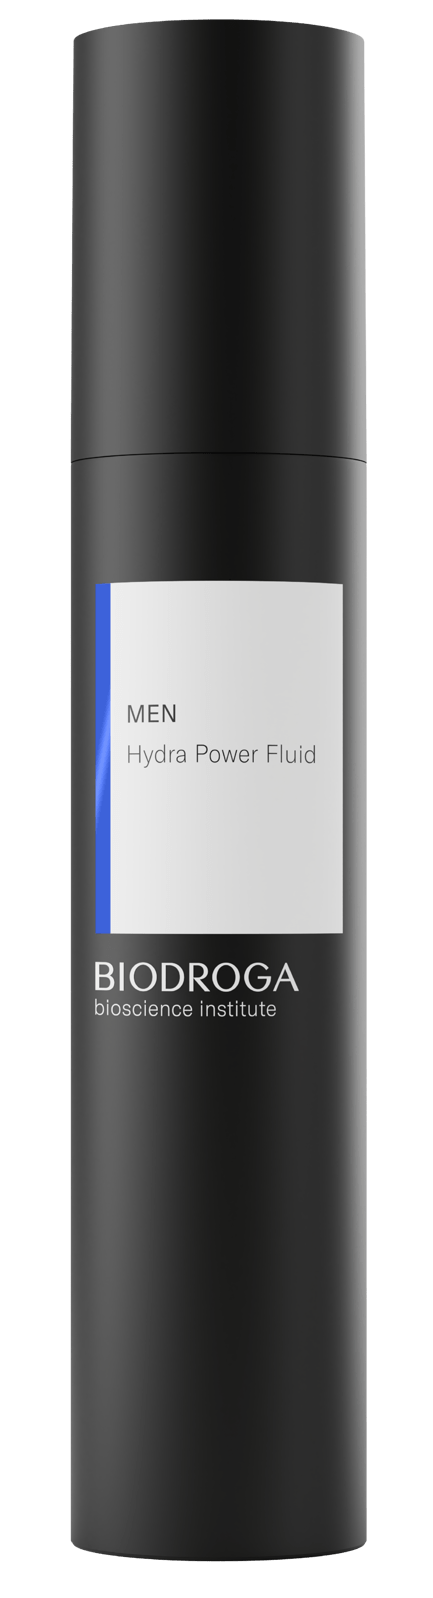 MEN Hydra Power Fluid